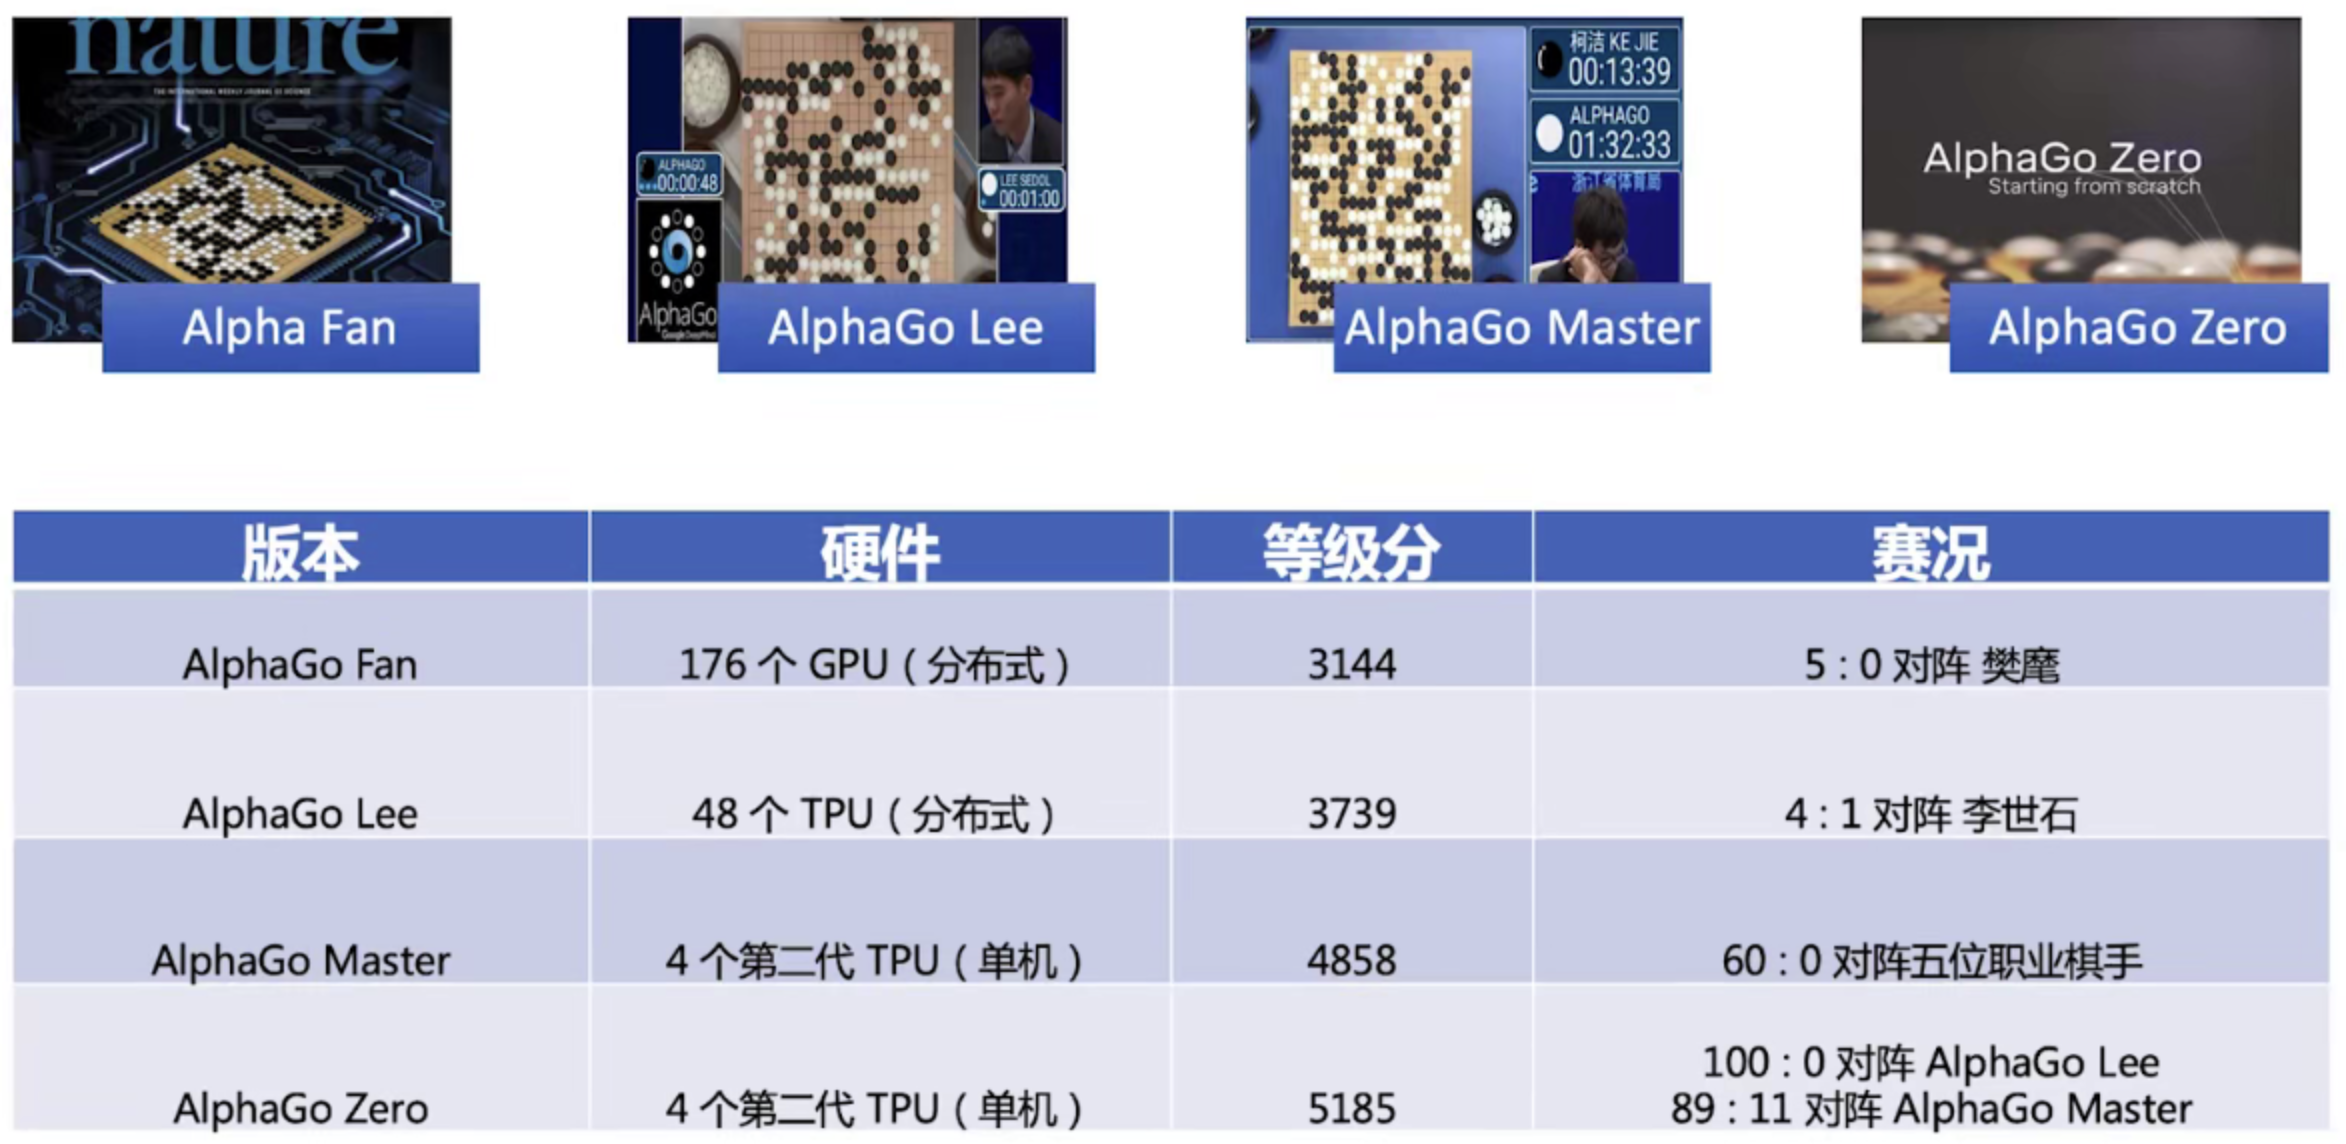 AlphaGo+TensorFlow大胜人类围棋高手